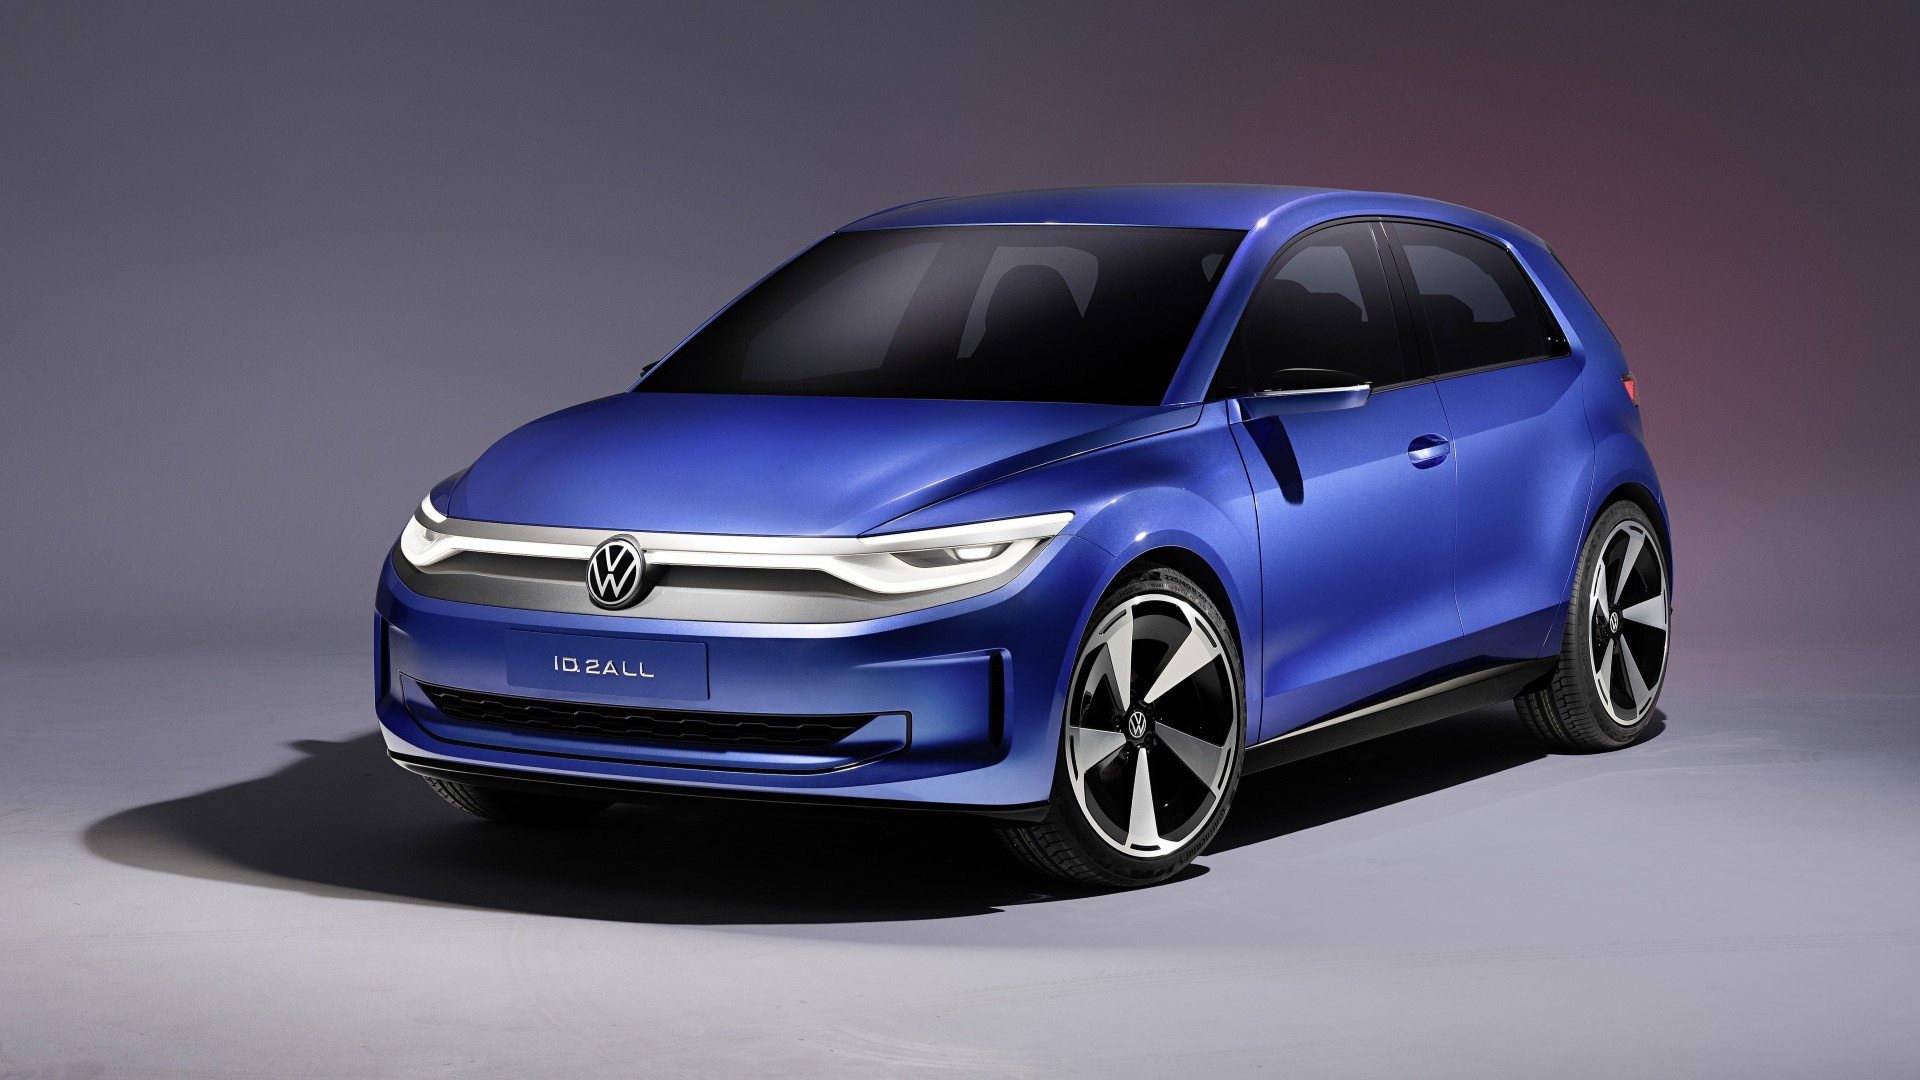 Volkswagen ID. 2all: Το ηλεκτρικό αυτοκίνητο του Λαού